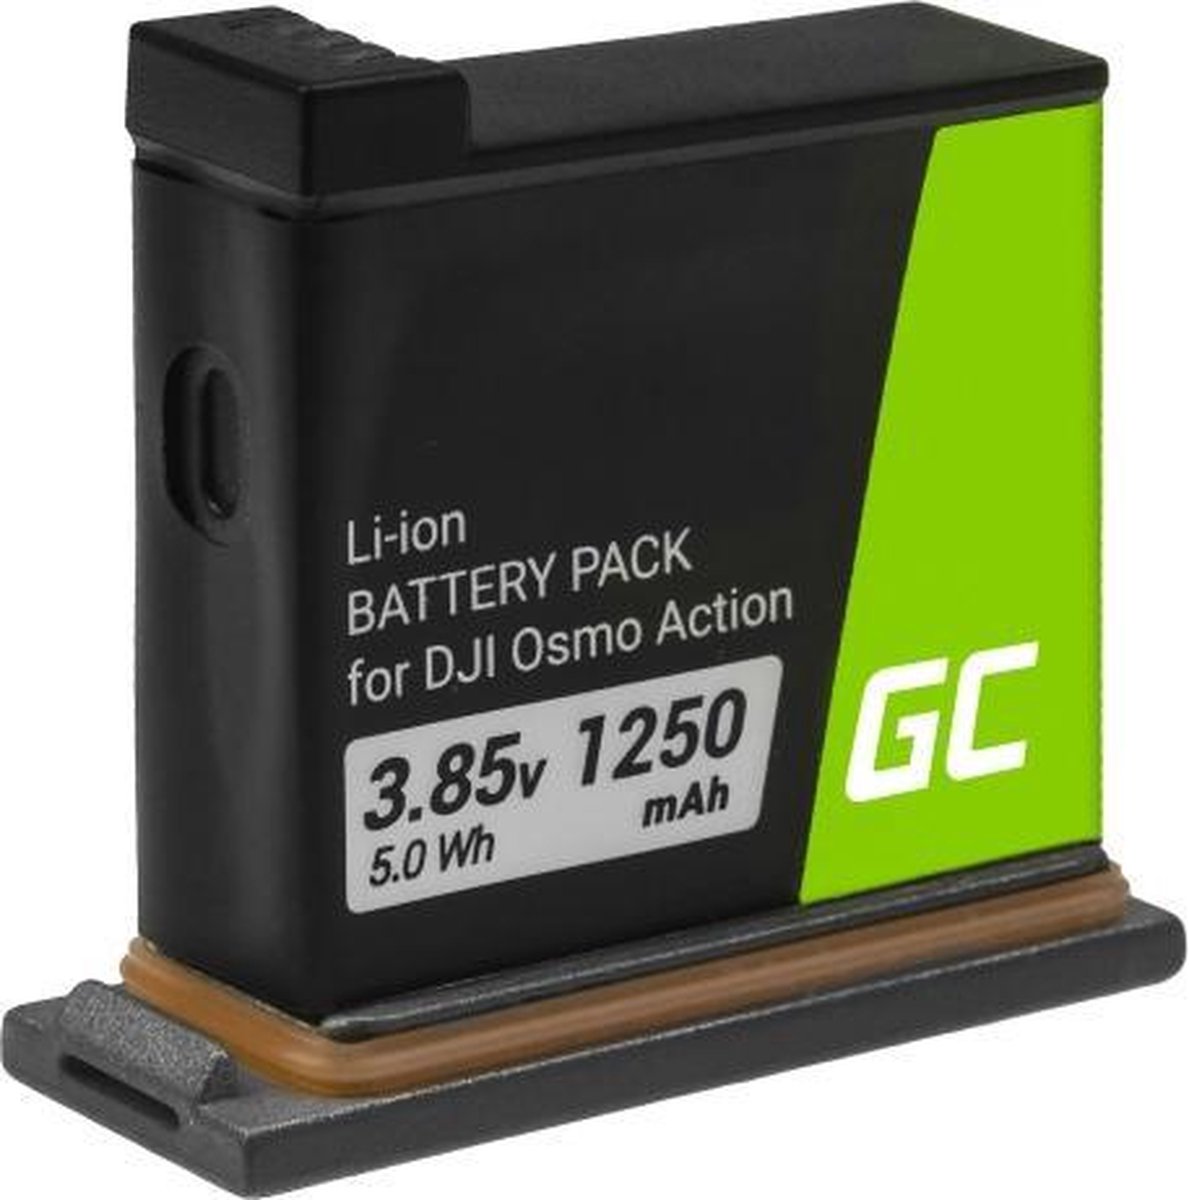 batterij AB1 voor DJI OSMO Action 3.85V 1250mAh. | bol.com